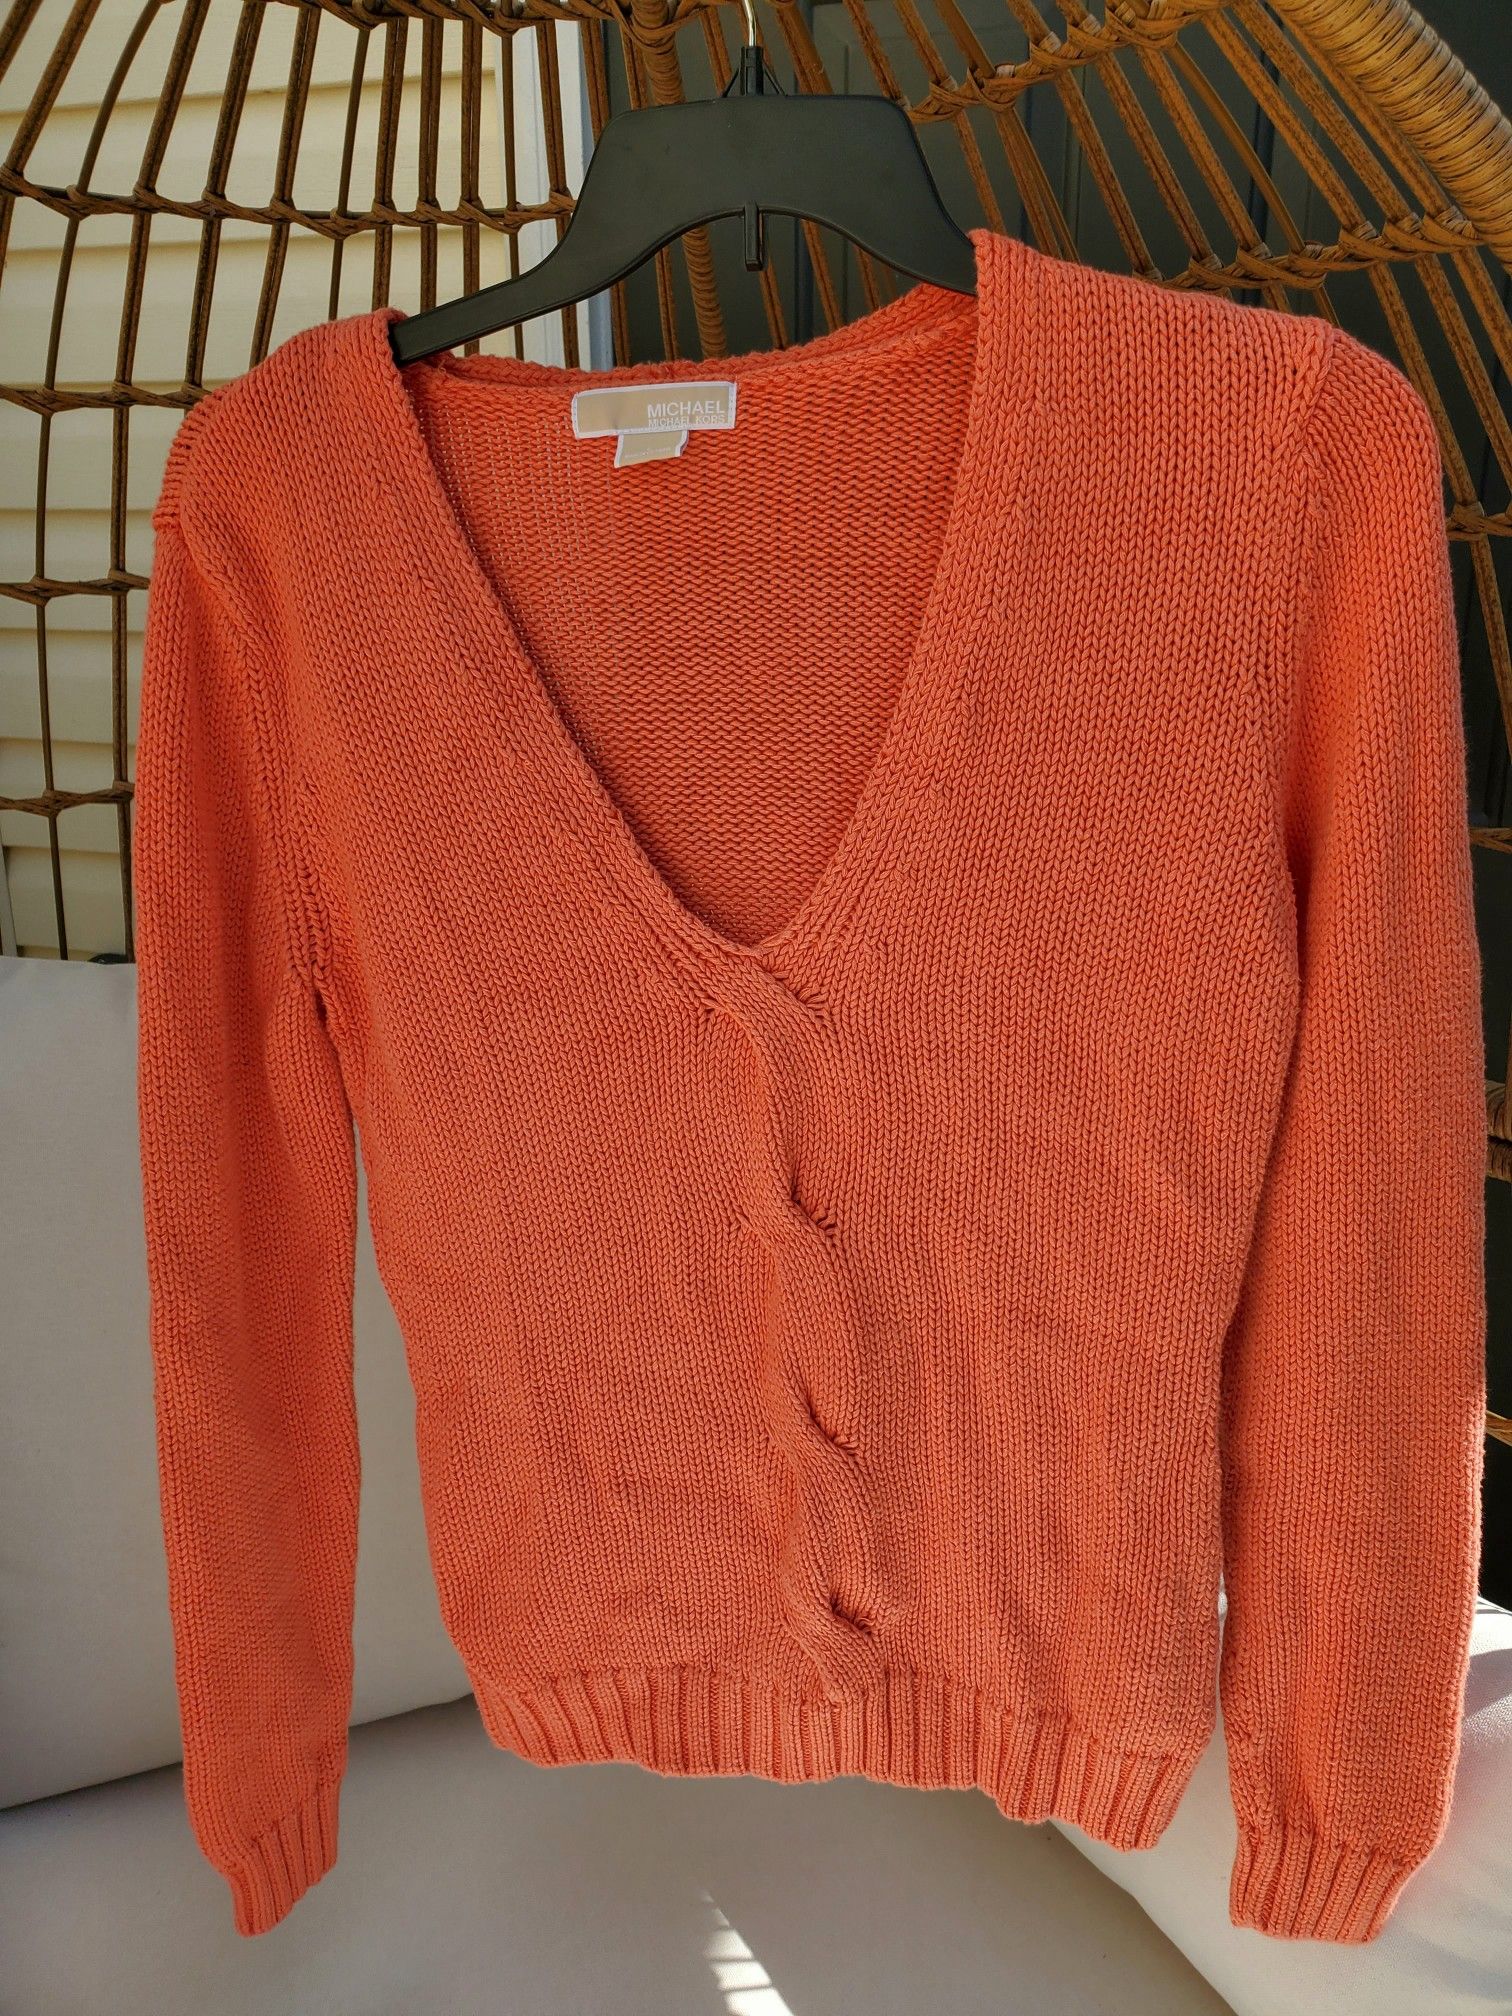 Michael Kors orange sweater women's large